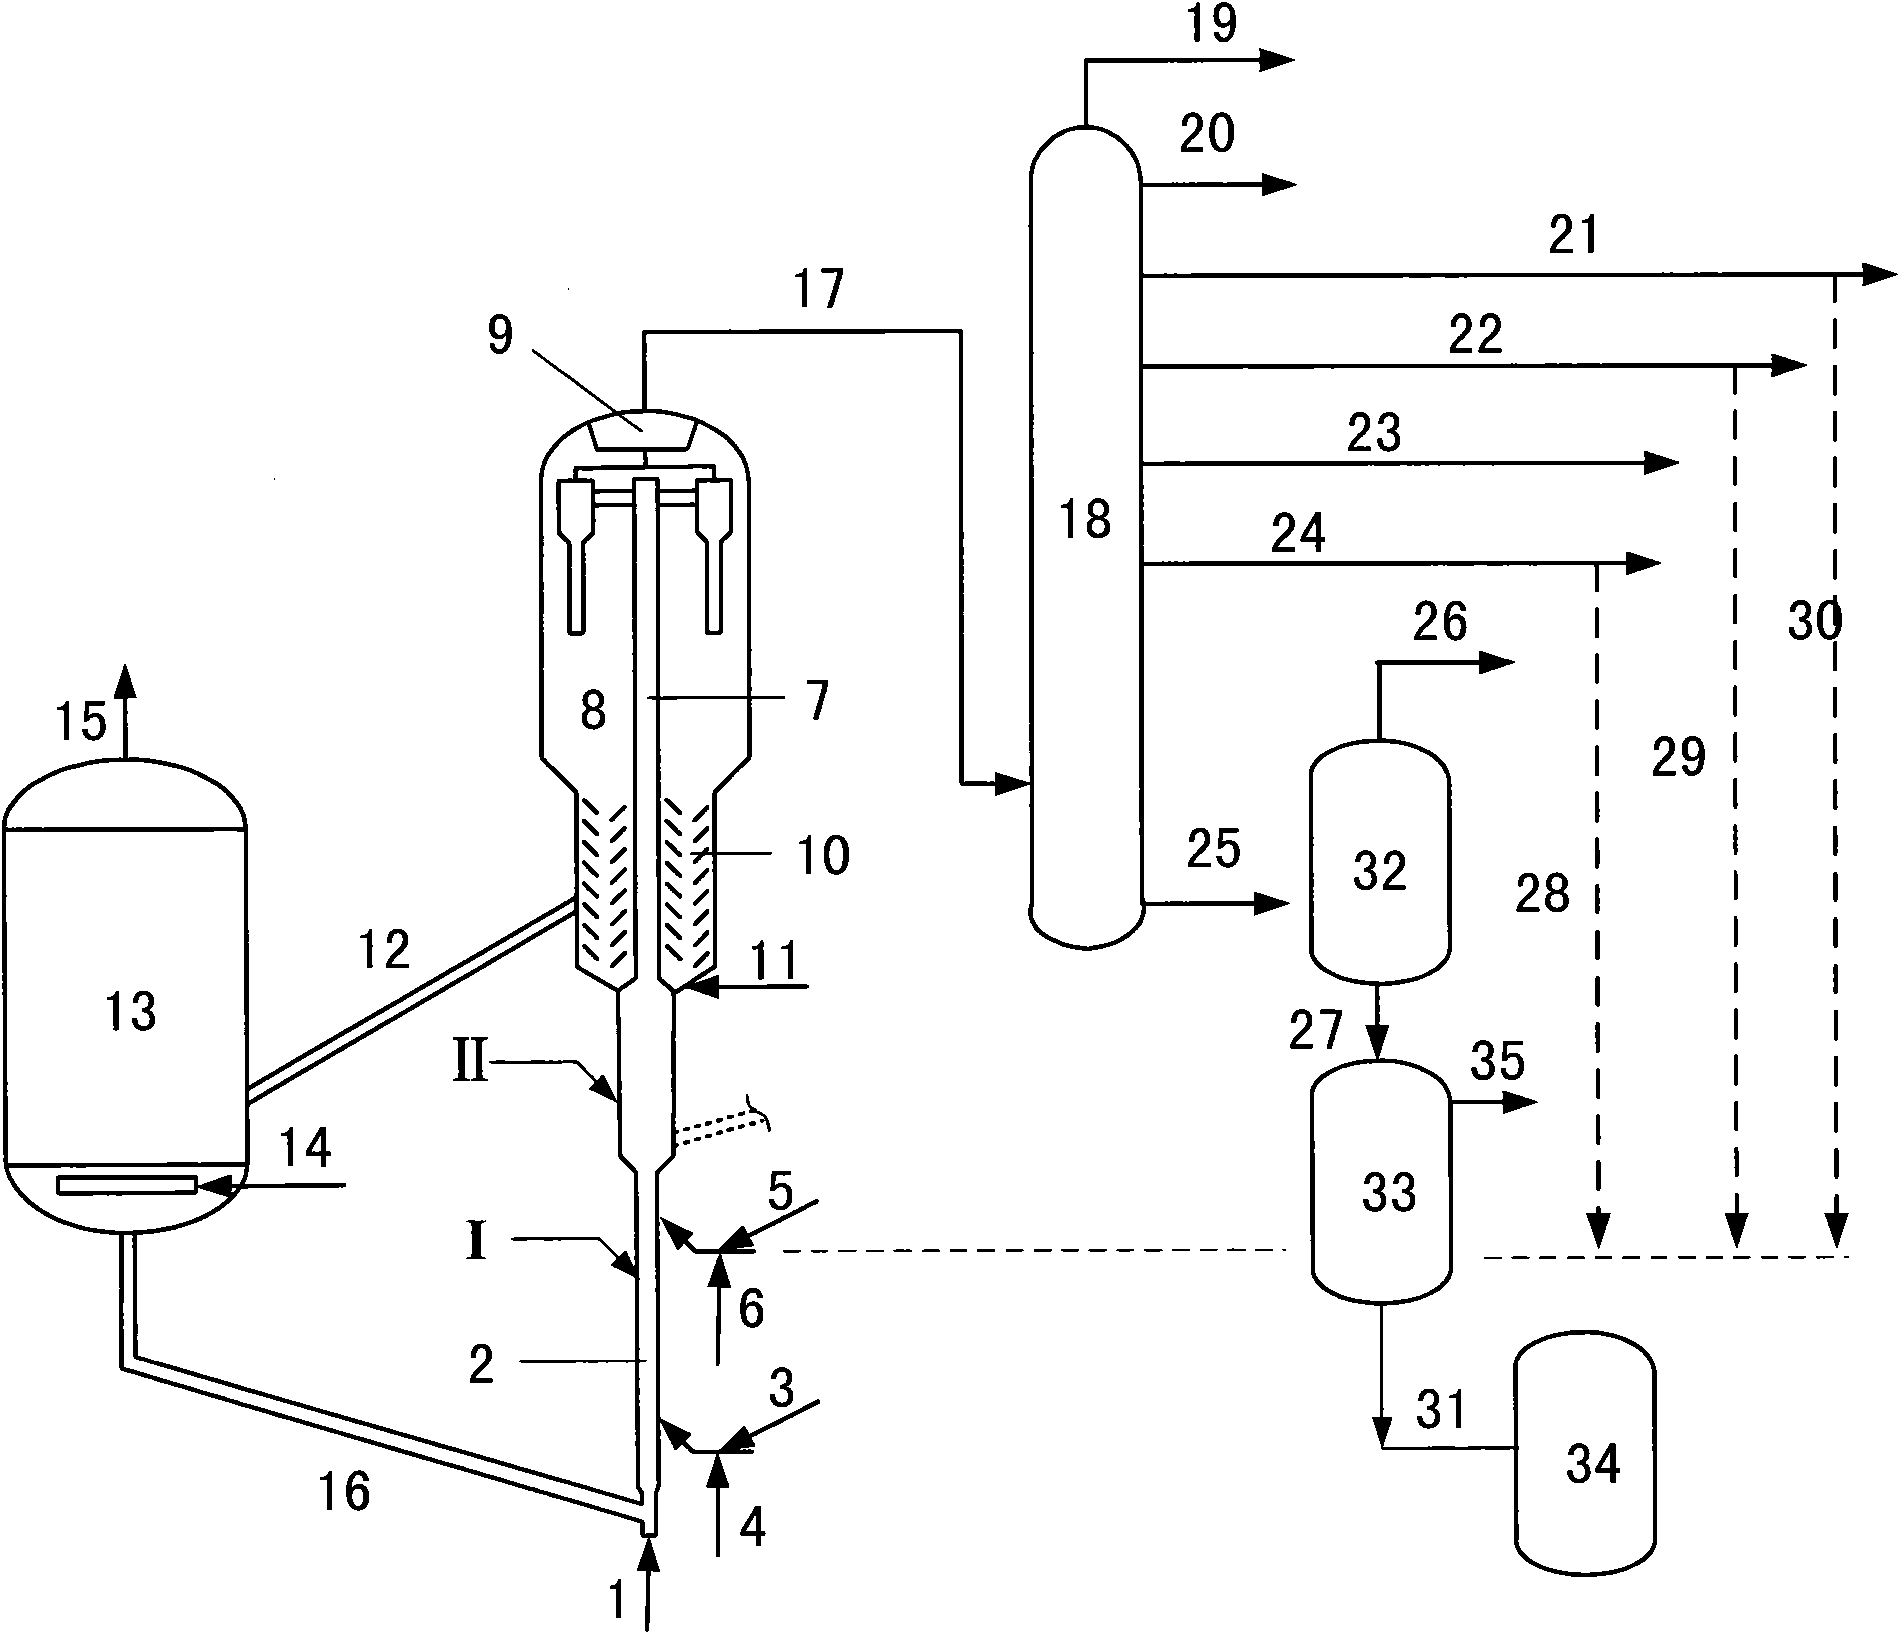 Method for preparing superior fuel oil from inferior crude oil